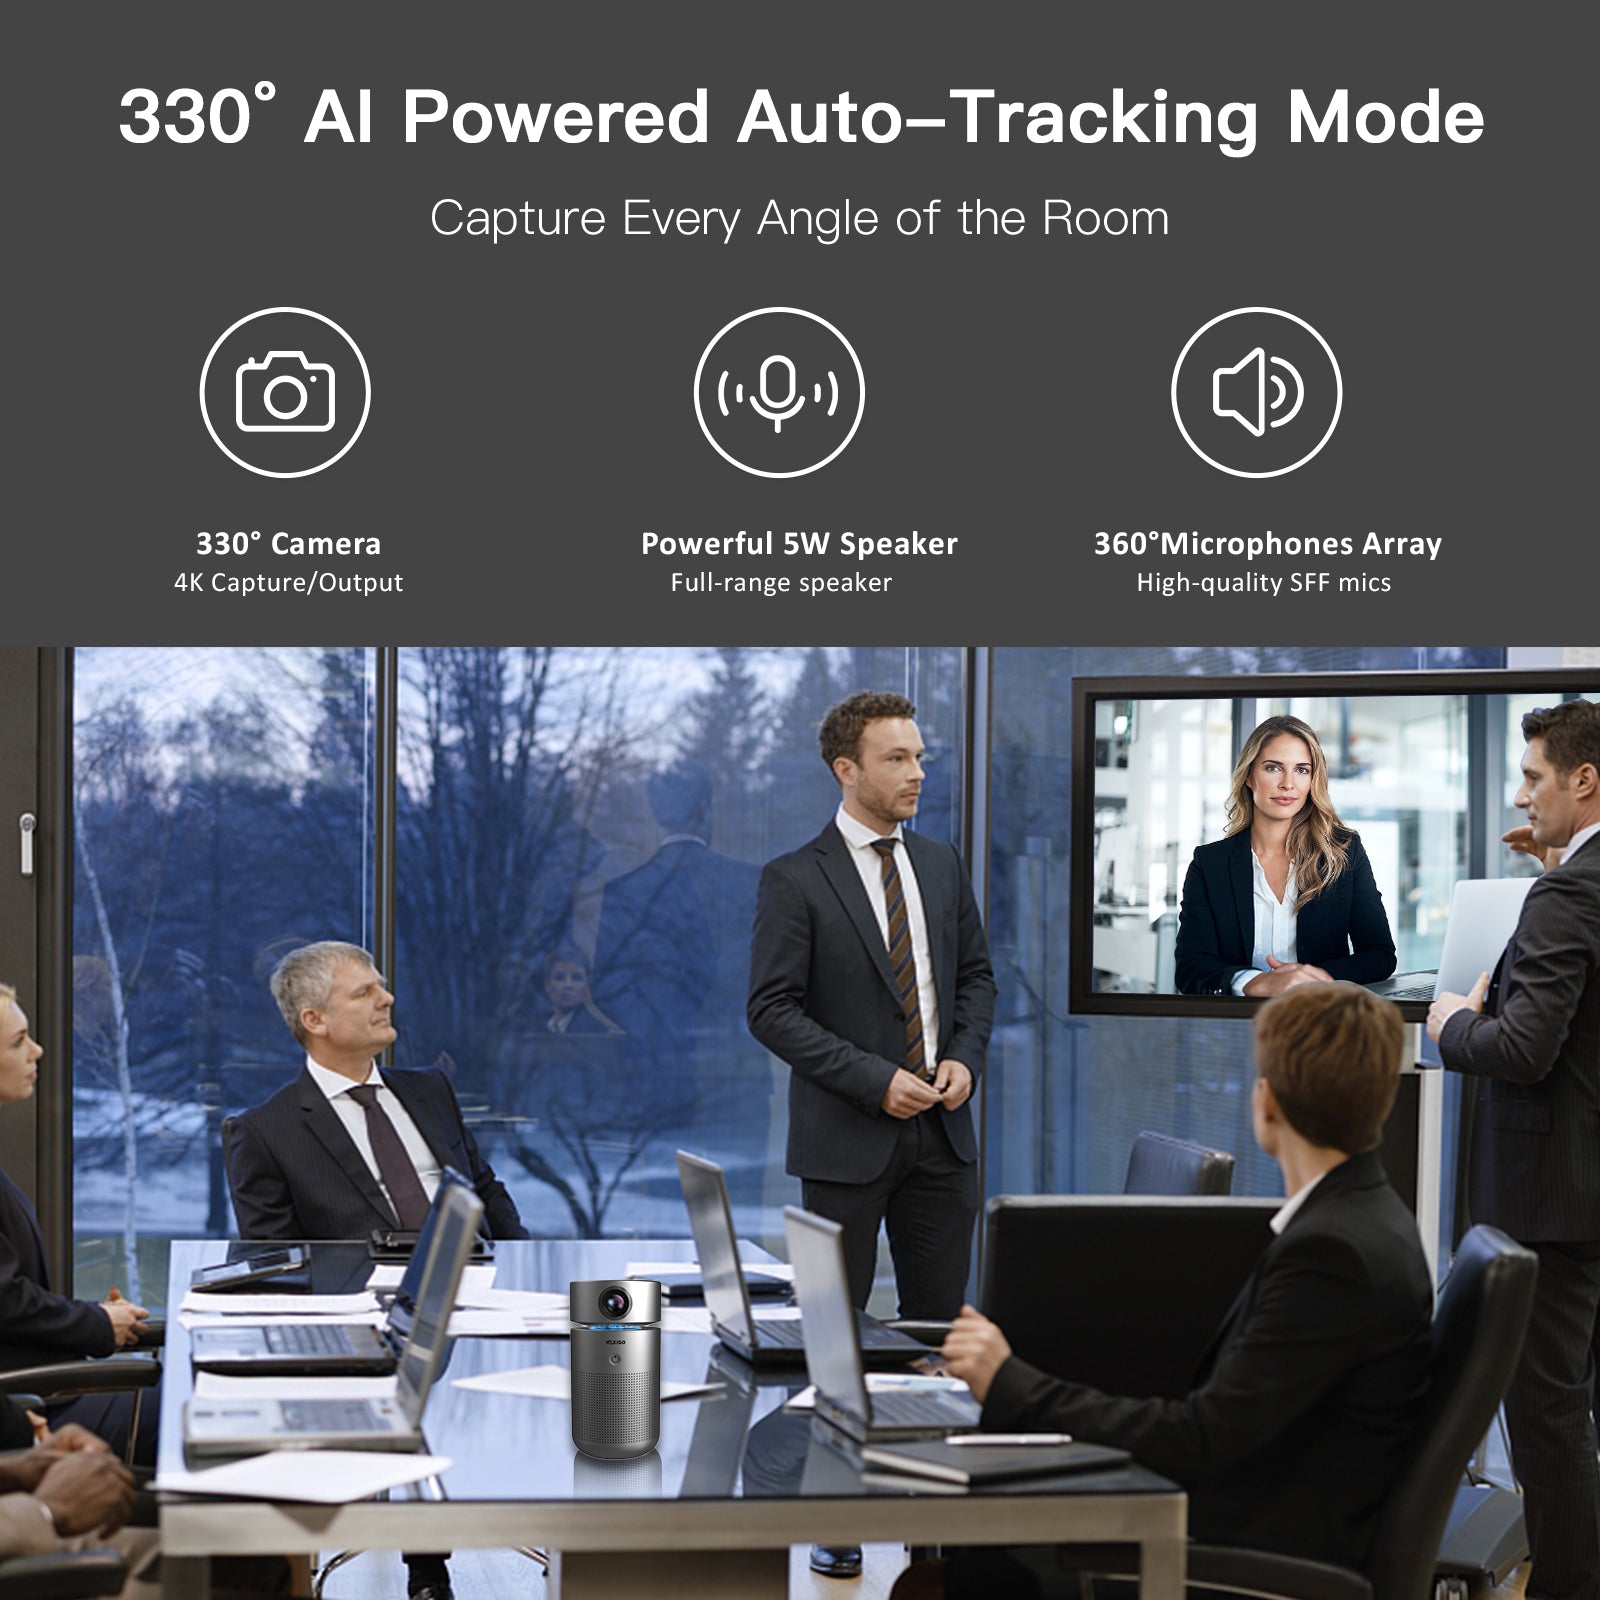 NexiGo Meeting Pro N4000 features 330¡ãAI powered auto-tracking mode